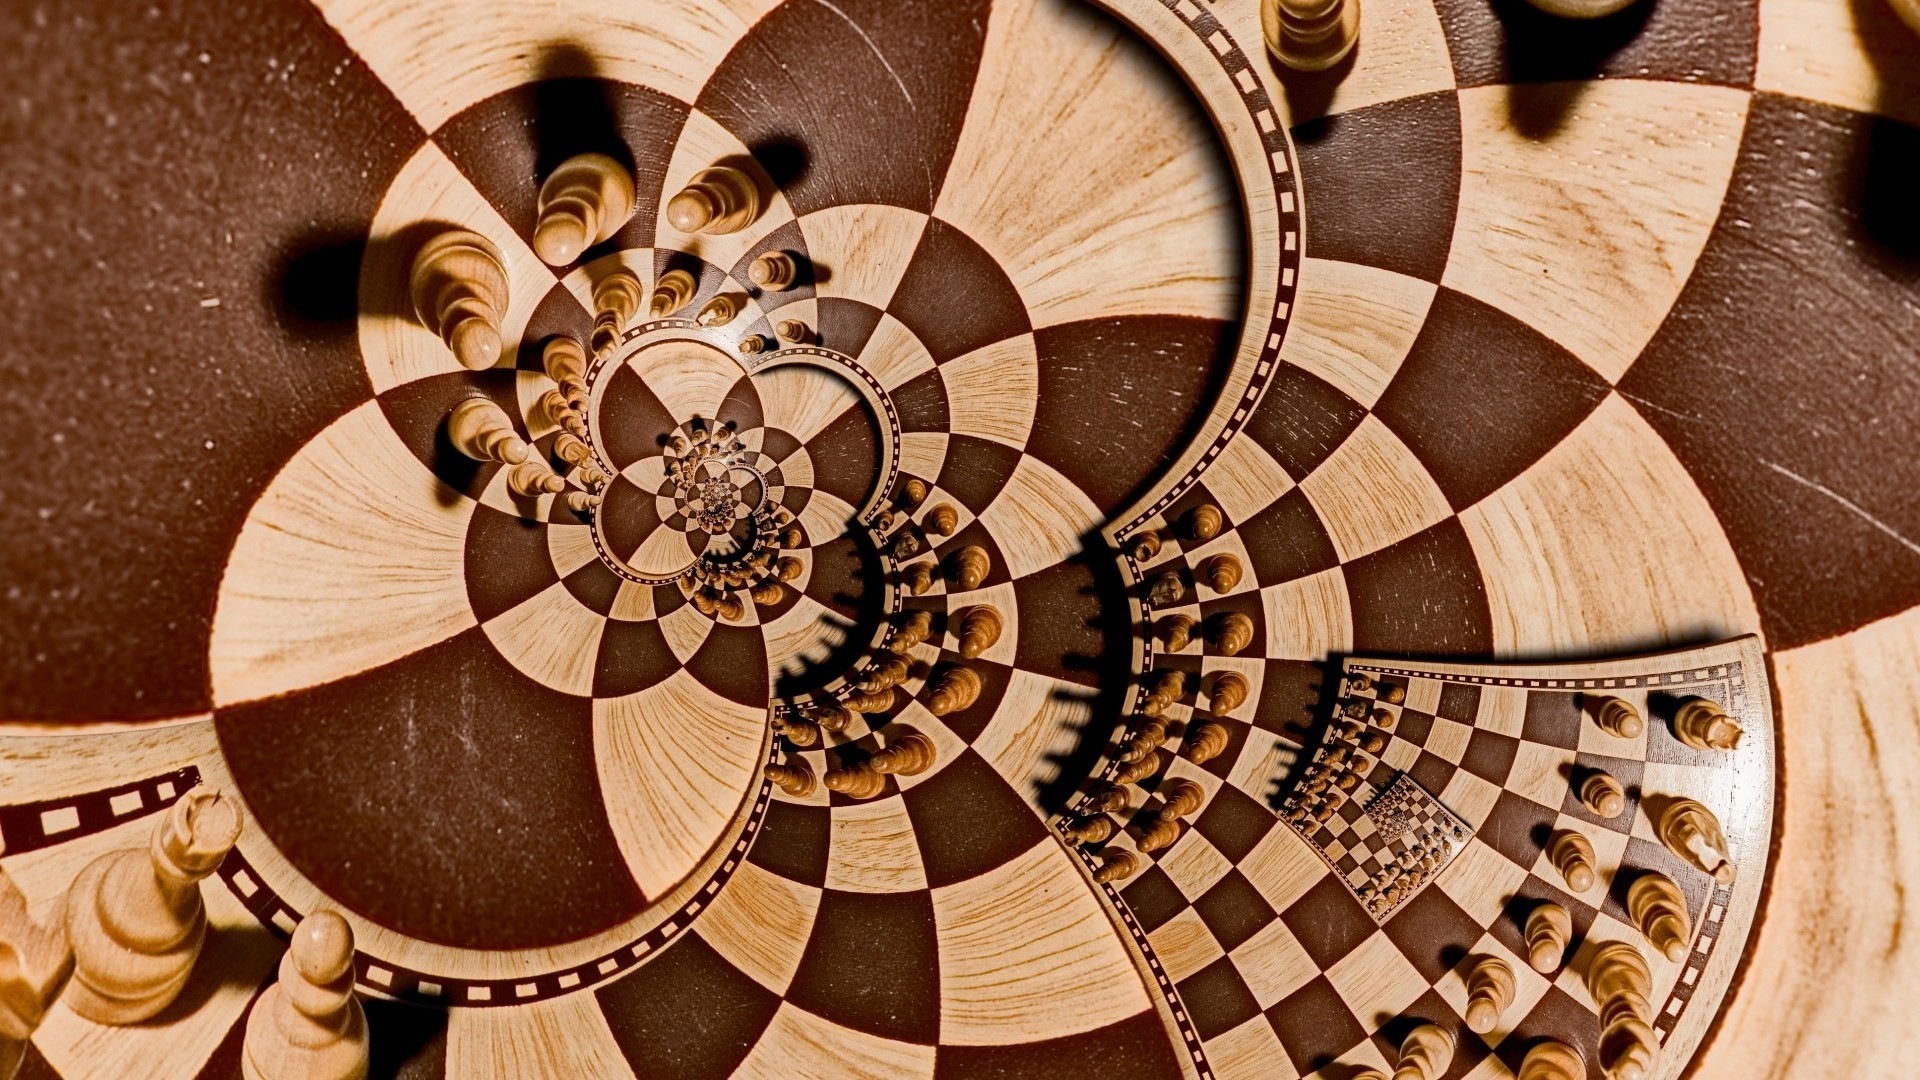 Digital Art Optical Illusion Brown Board Games Chess Pawns Distortion Circle Square Recursion 1920x1080